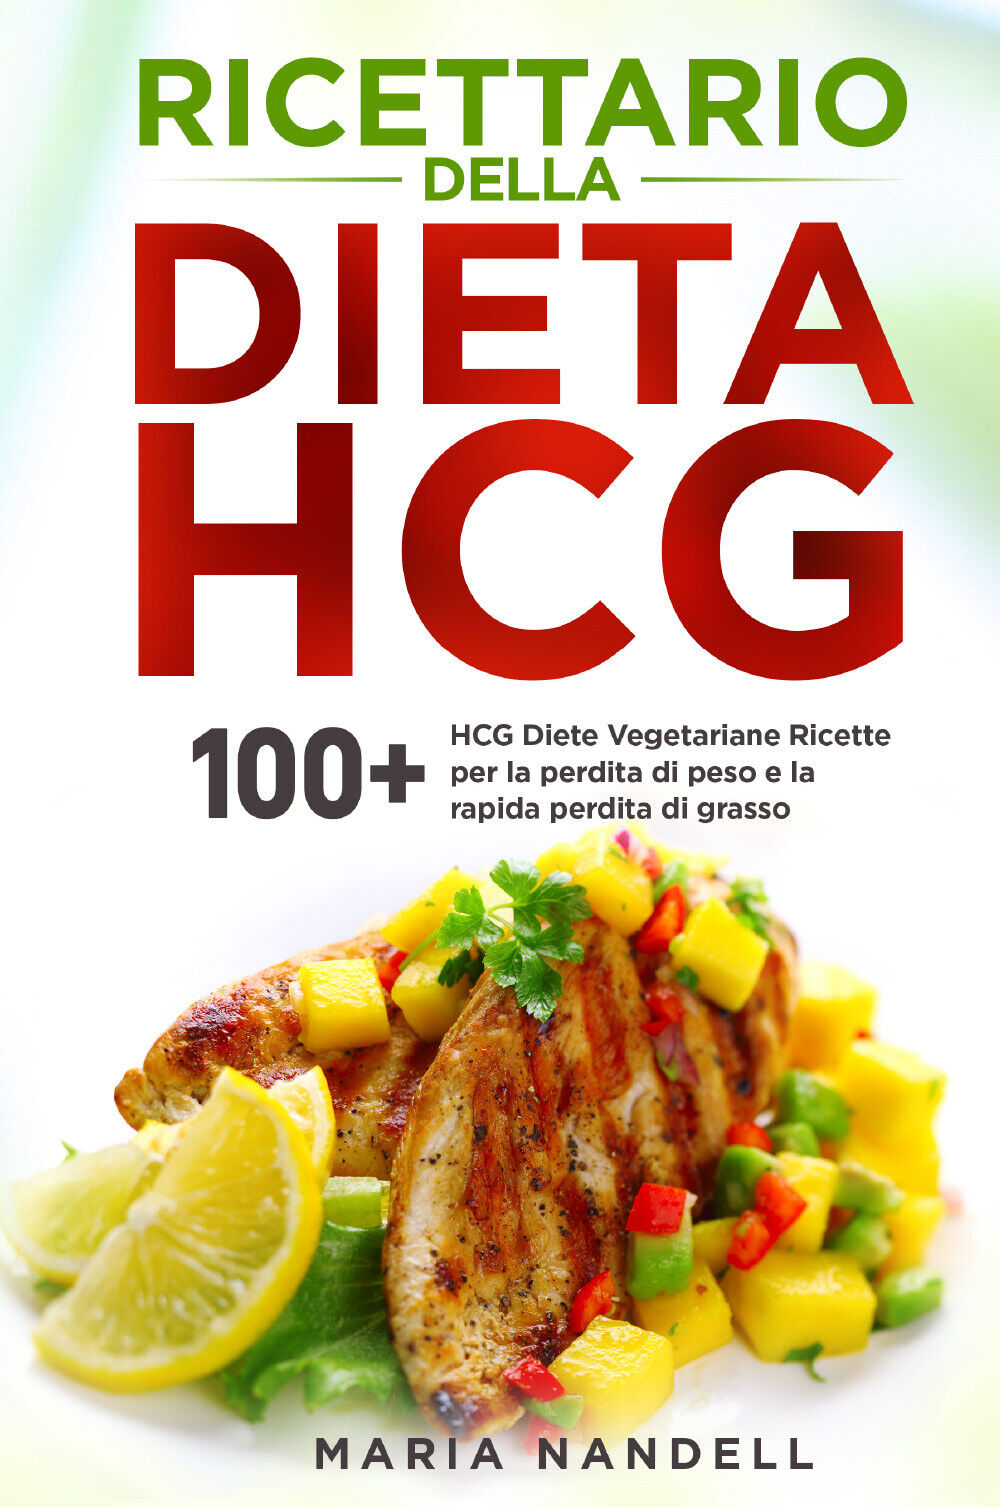 Ricettario della dieta HCG. 100+ HCG Diete Vegetariane Ricette per la perdita di